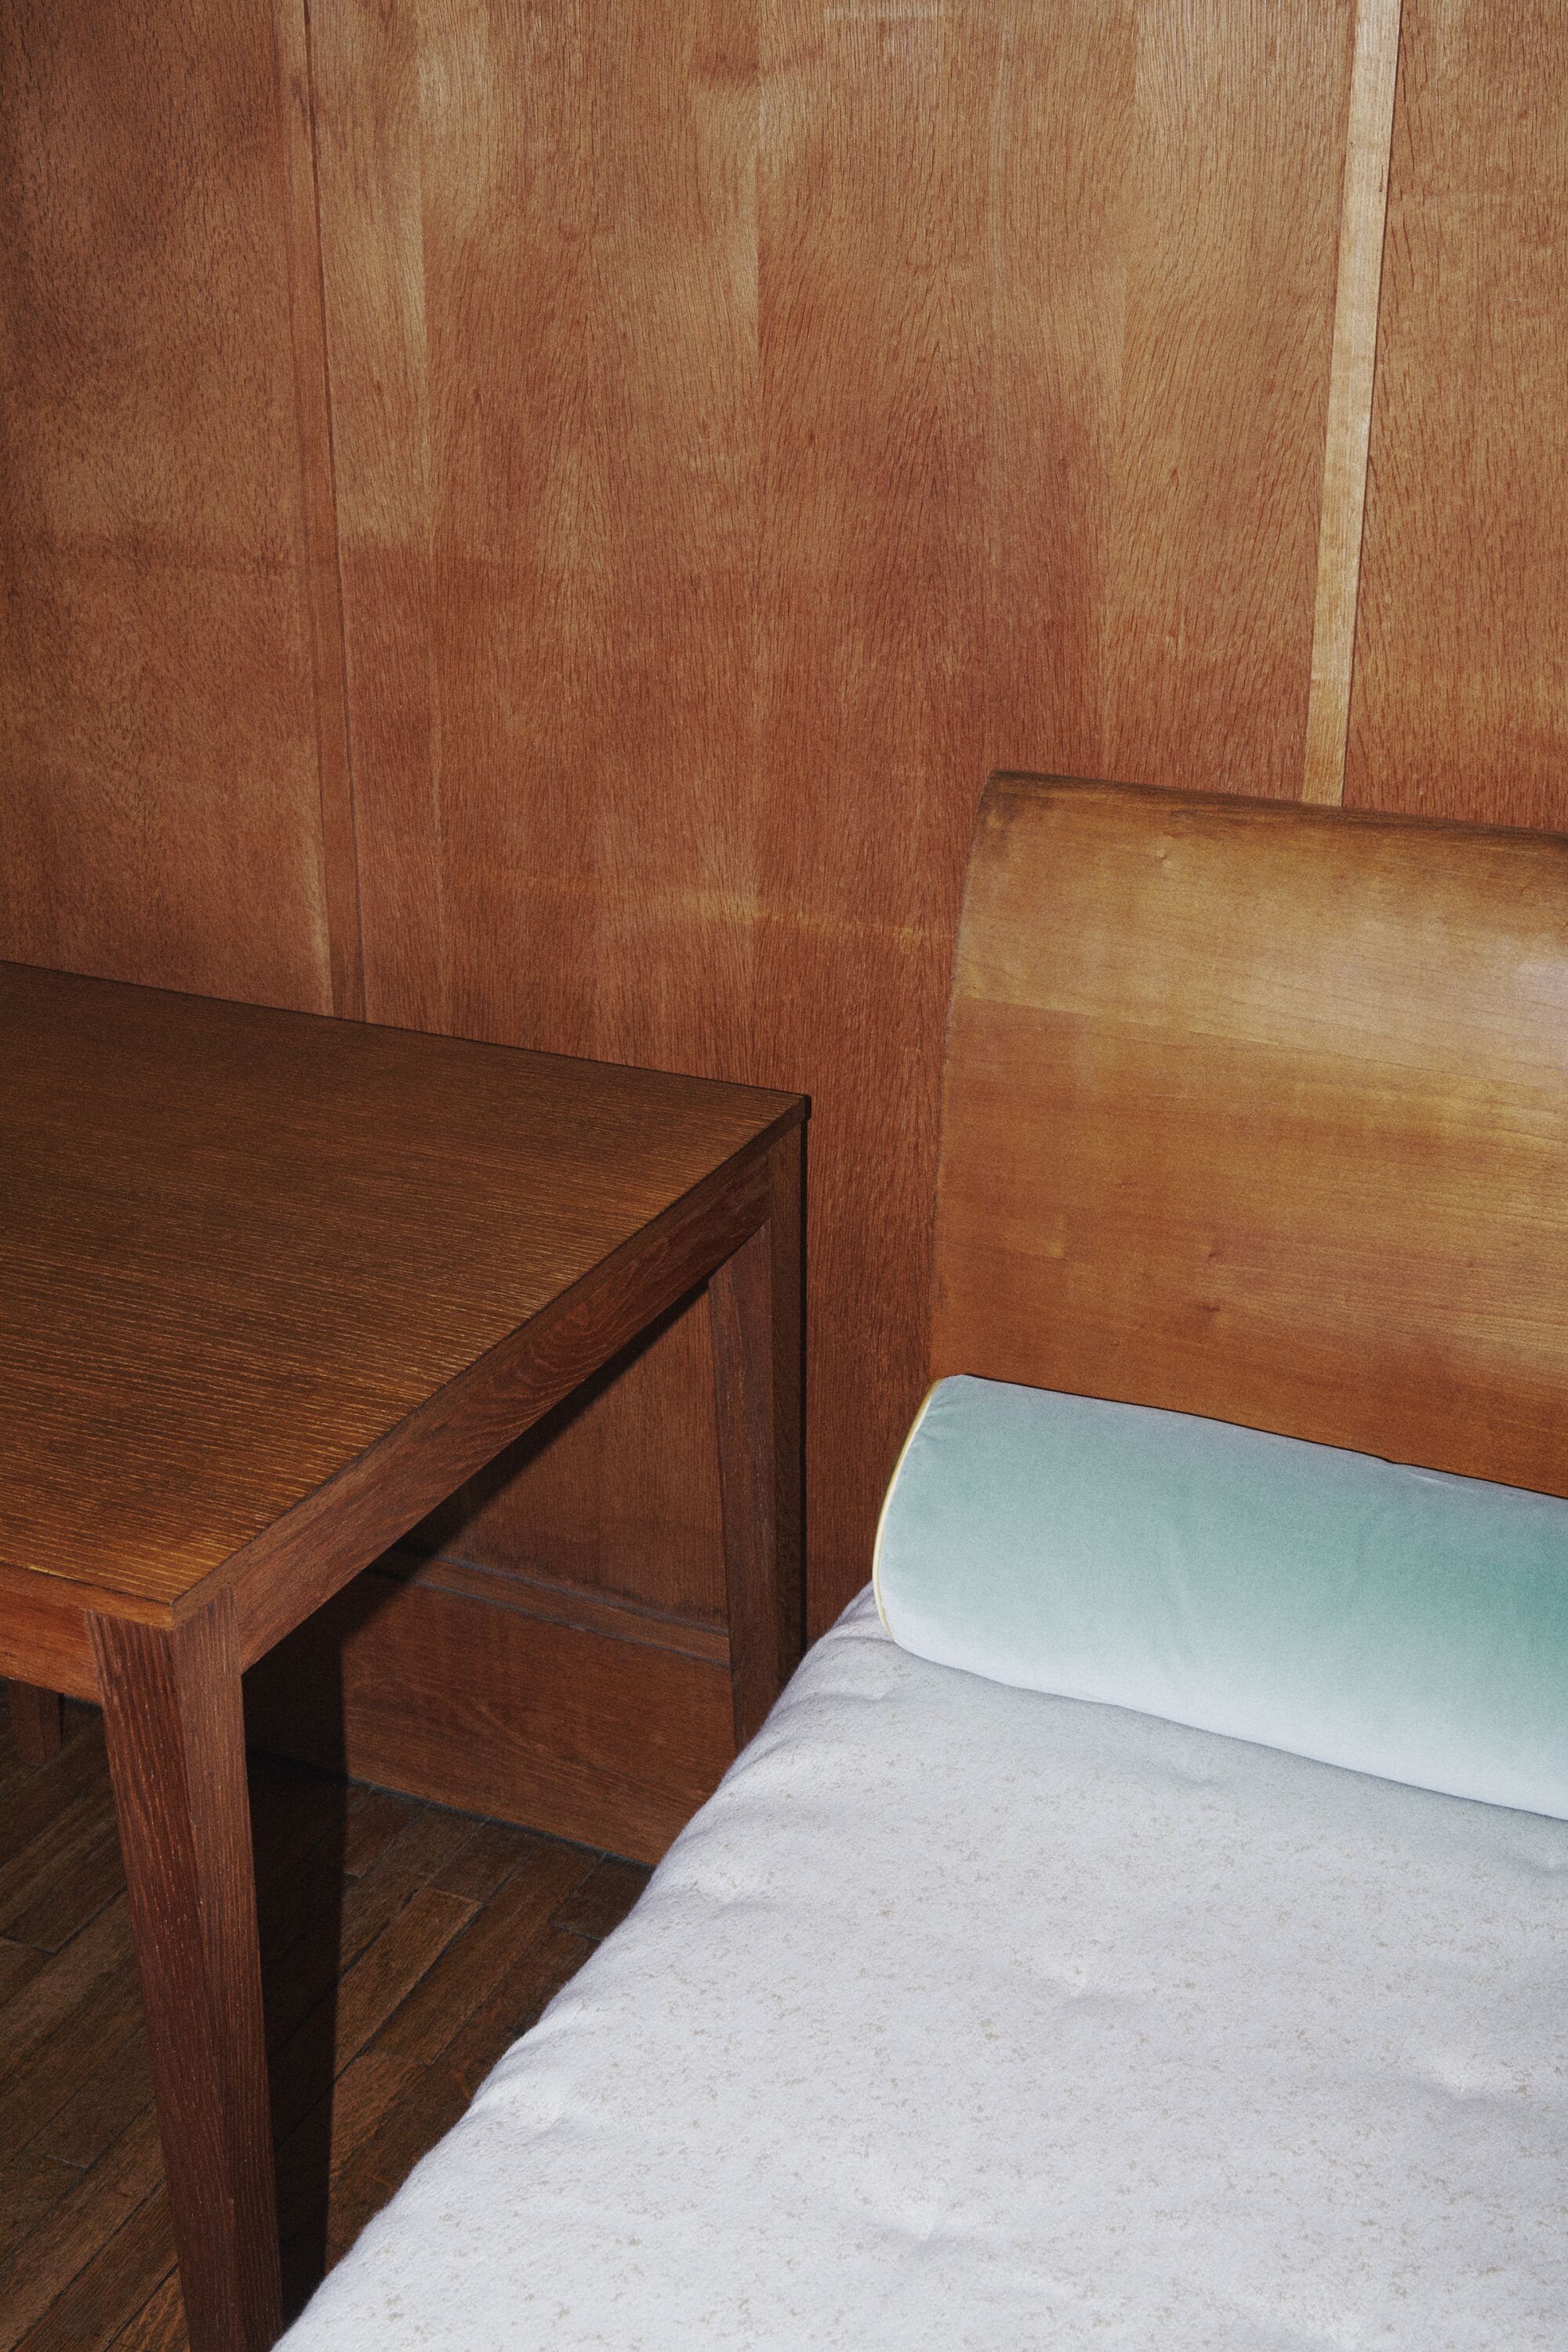 Saint Laurent Rive Droite French Modernist bedroom set.